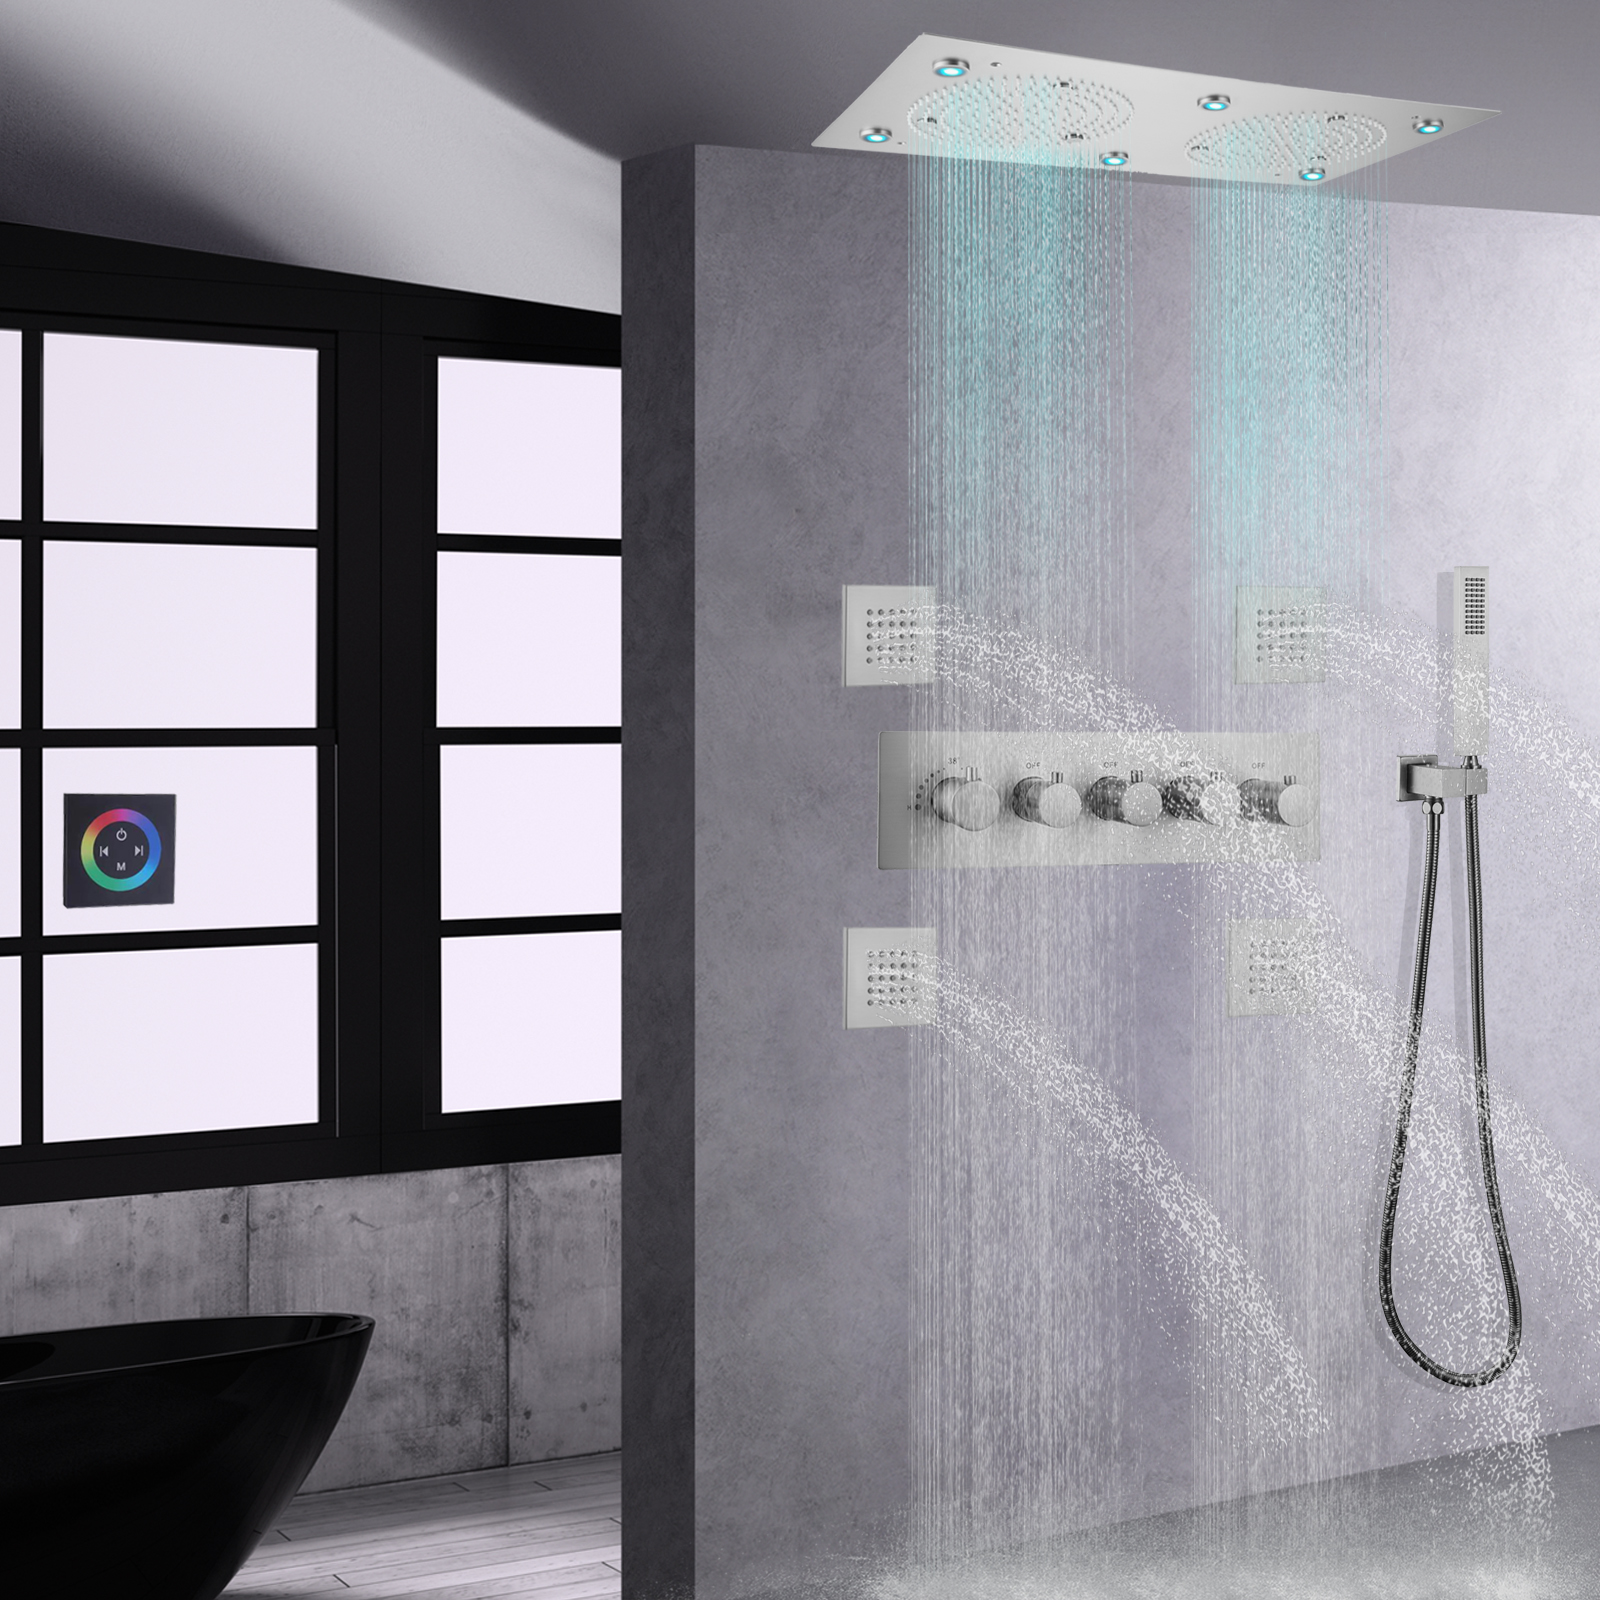 Moderno sistema de chuveiro LED de níquel escovado conjunto de névoa de chuva termostática de parede para banheiro